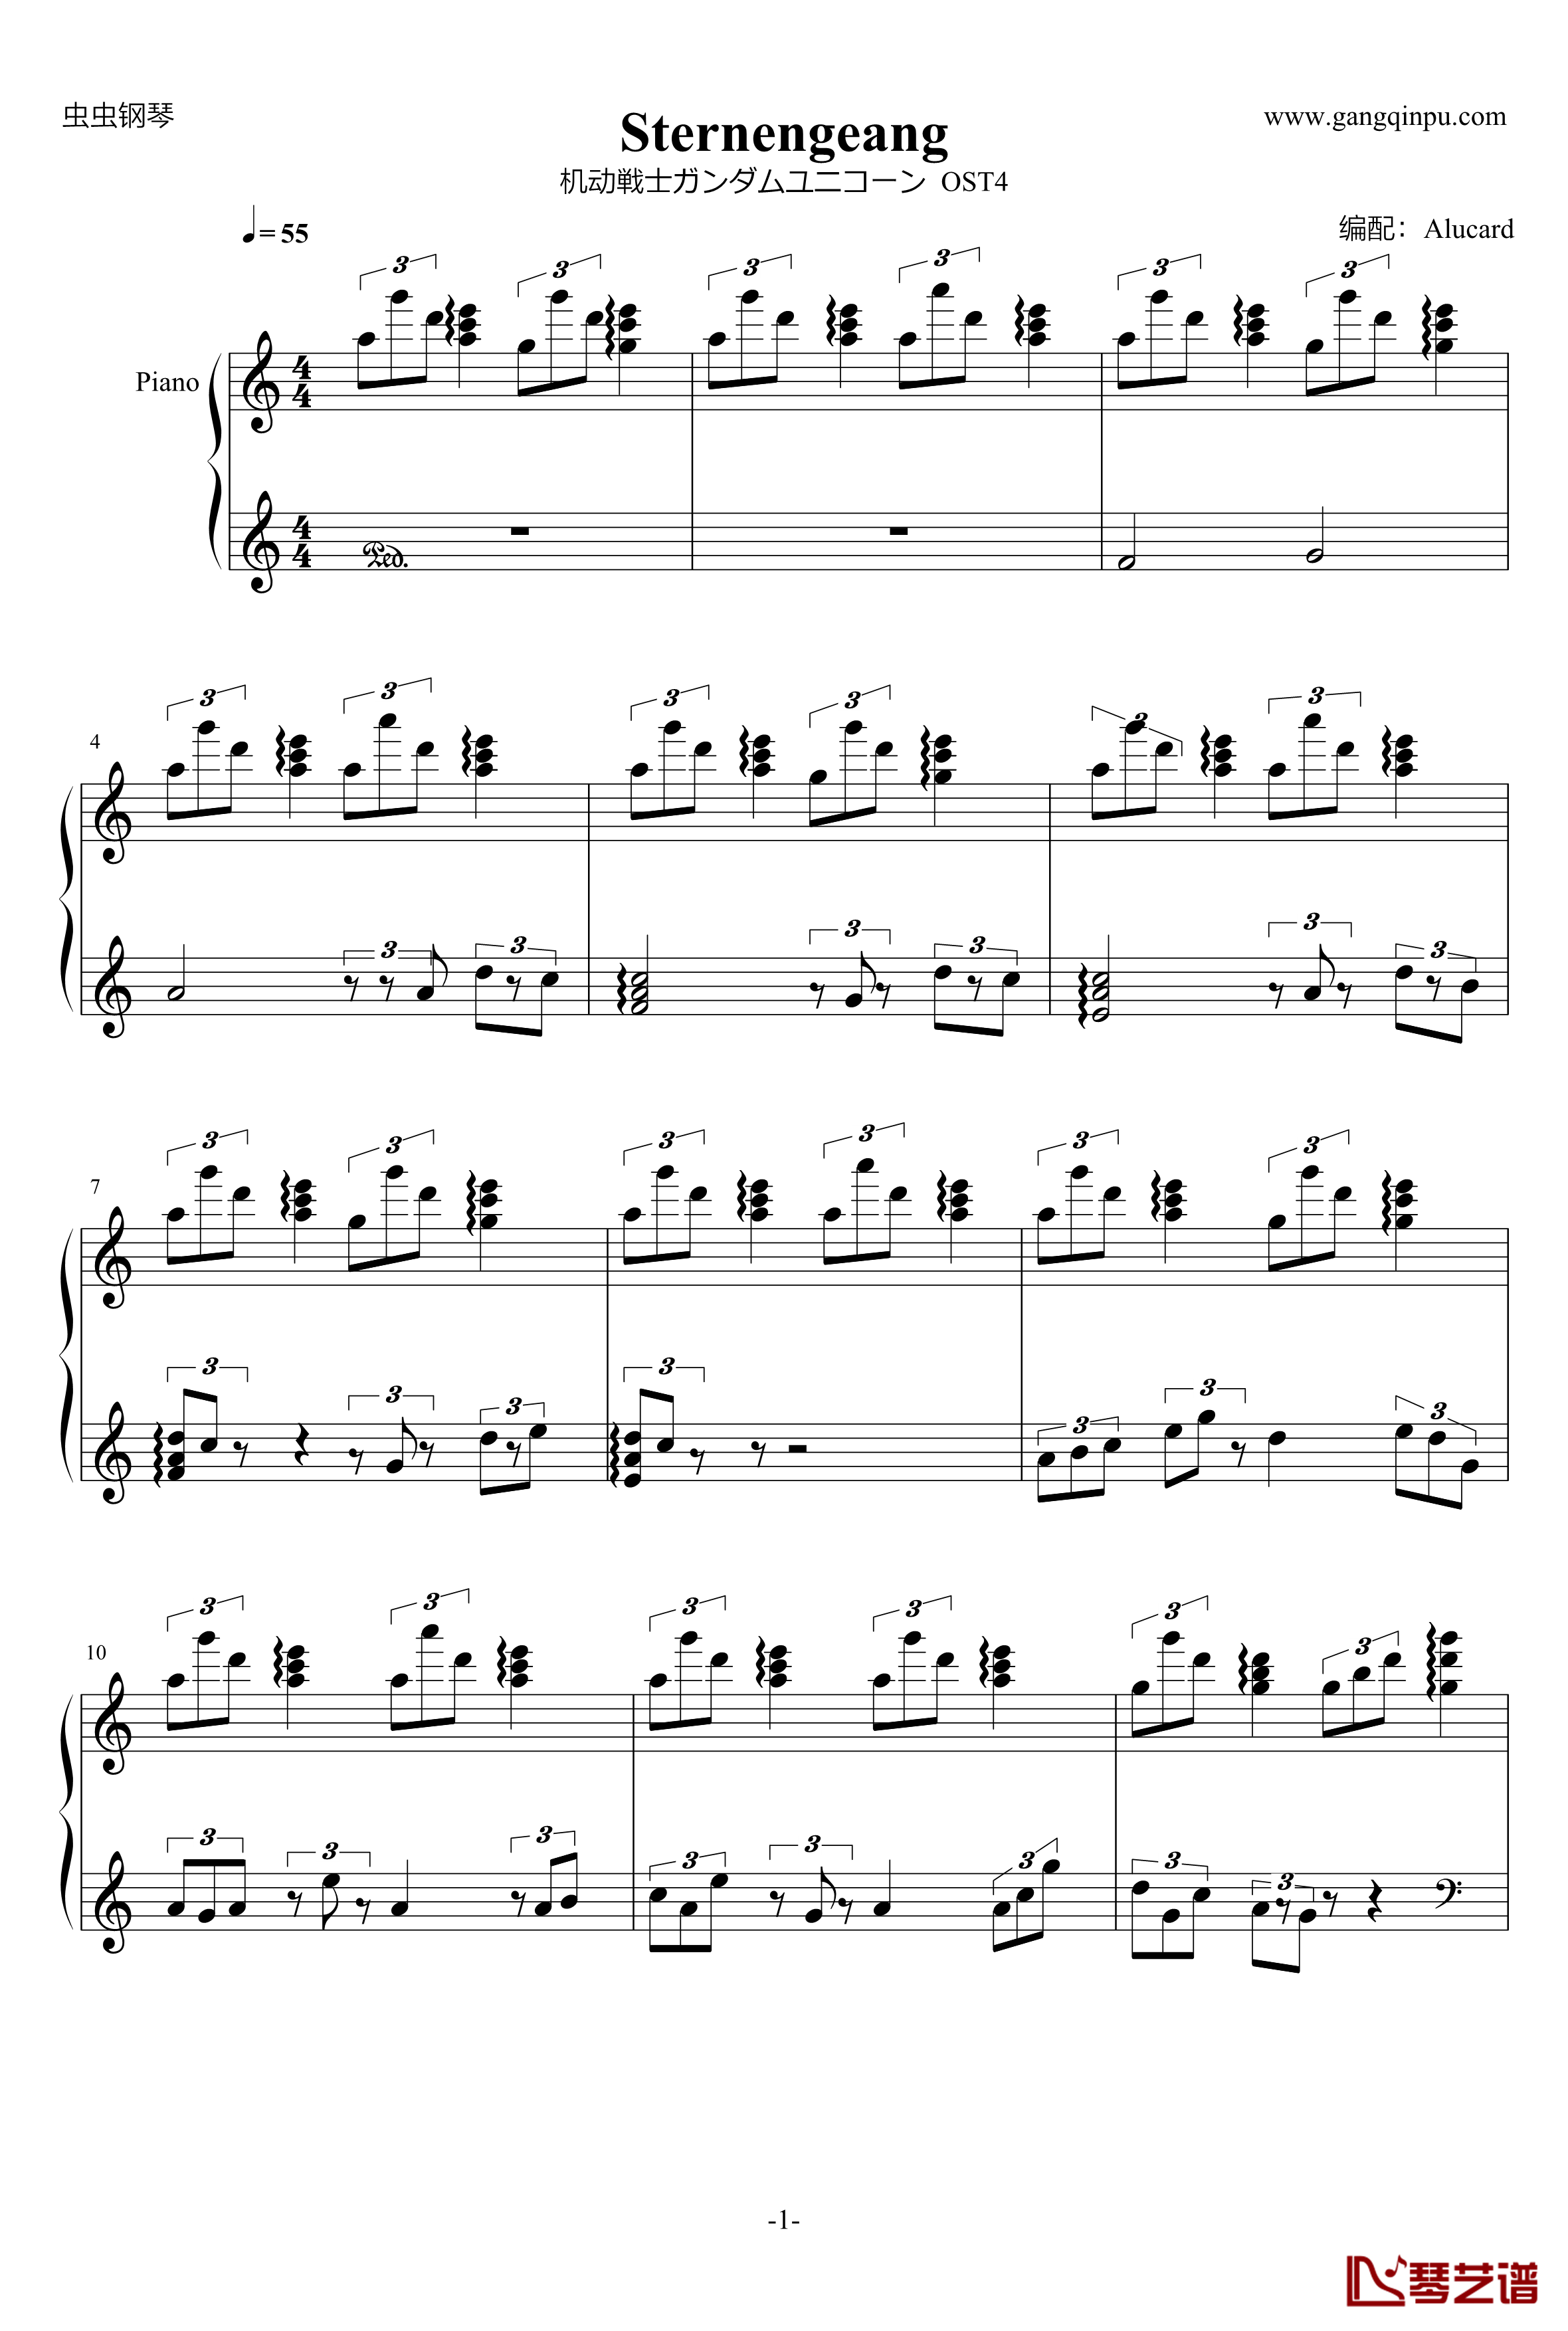 Sternengeang钢琴谱-机动戦士ガンダムユニコーン OST4-机动战士1